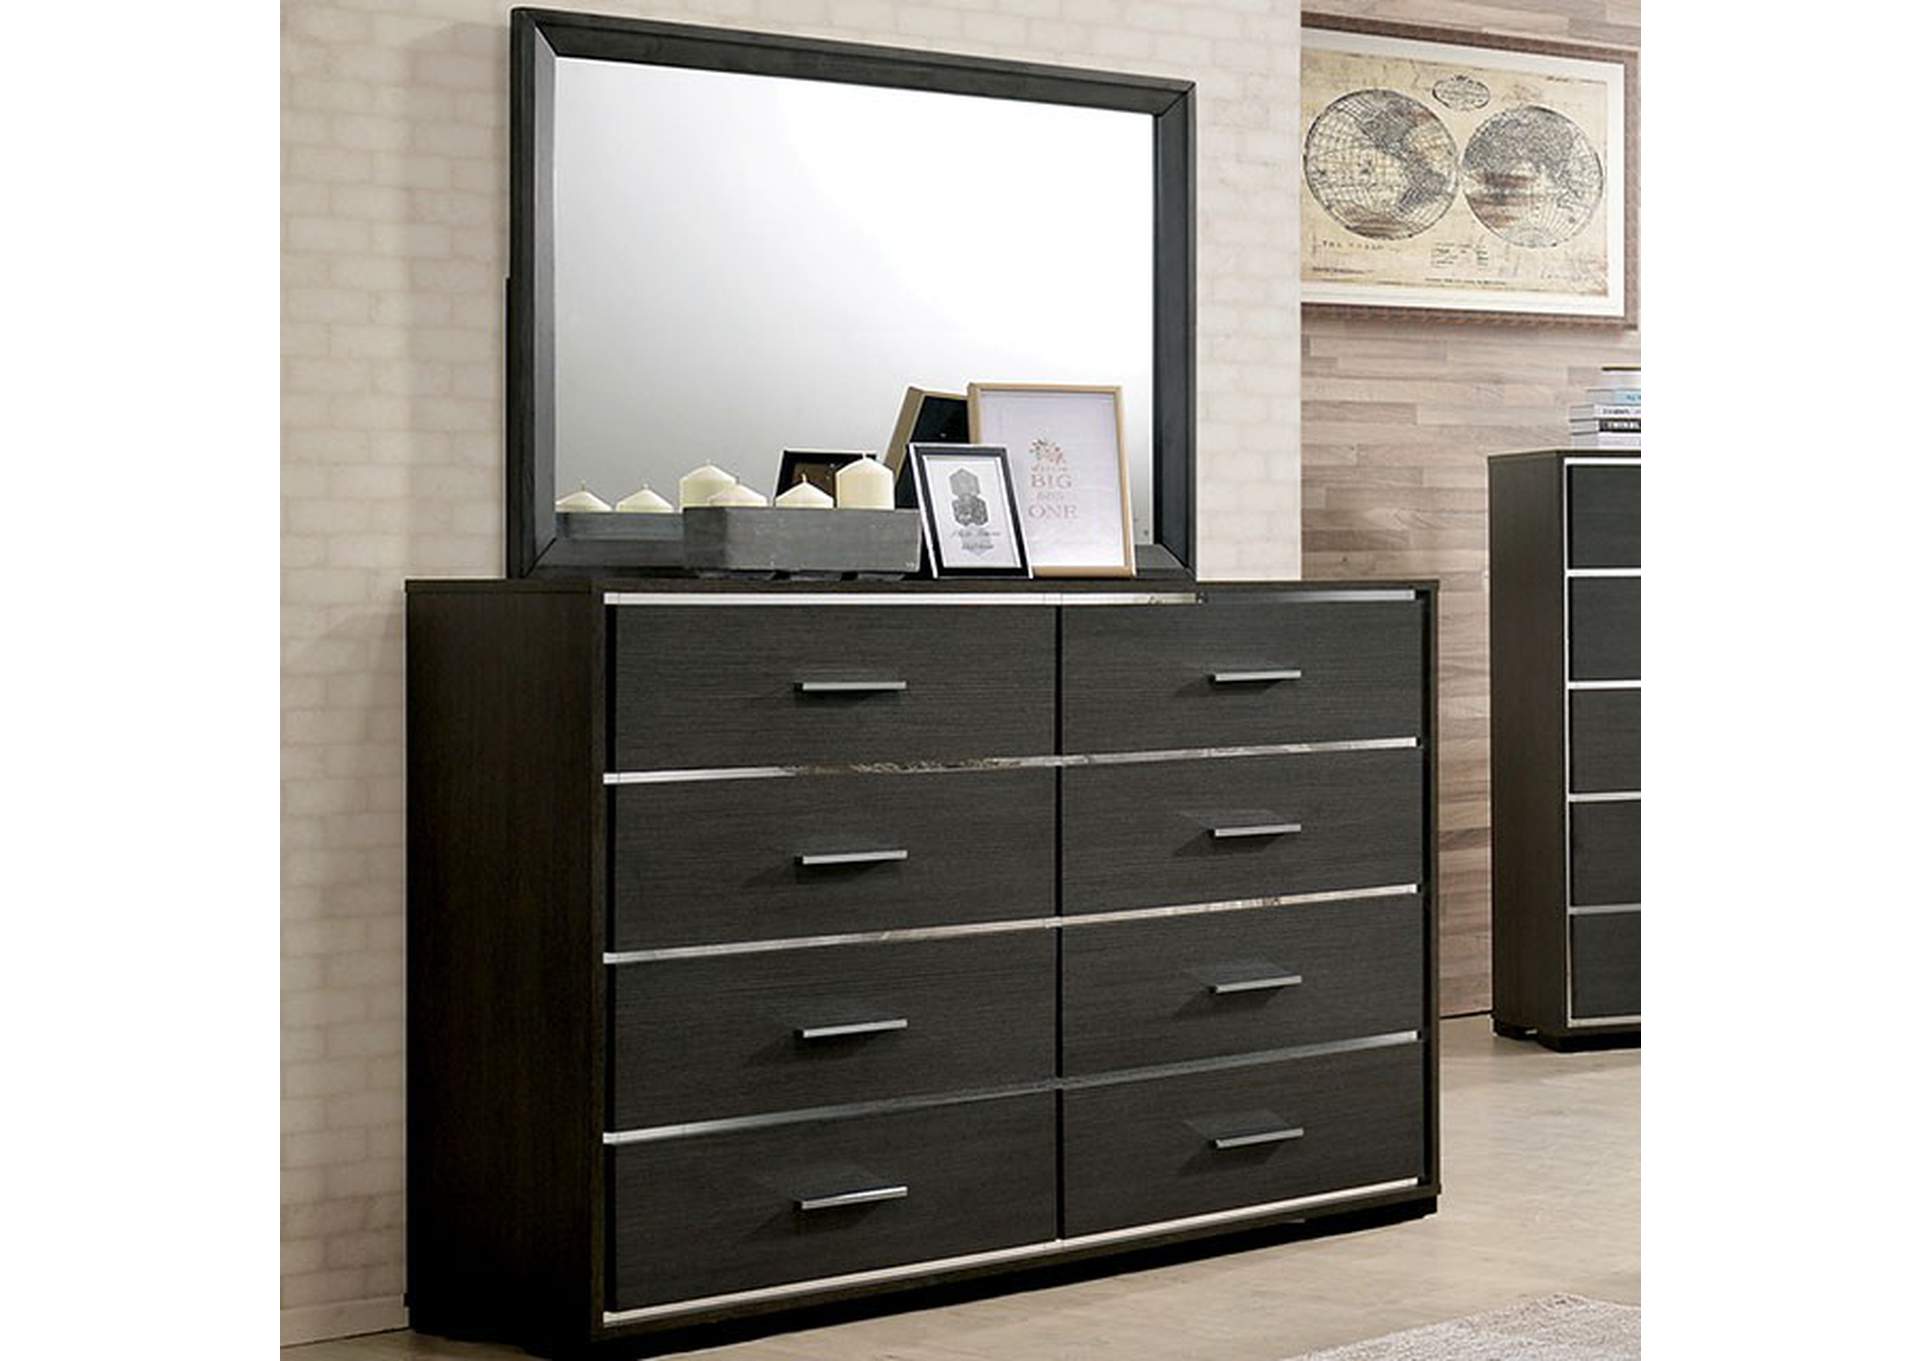 Camryn Warm Gray Dresser,Furniture of America